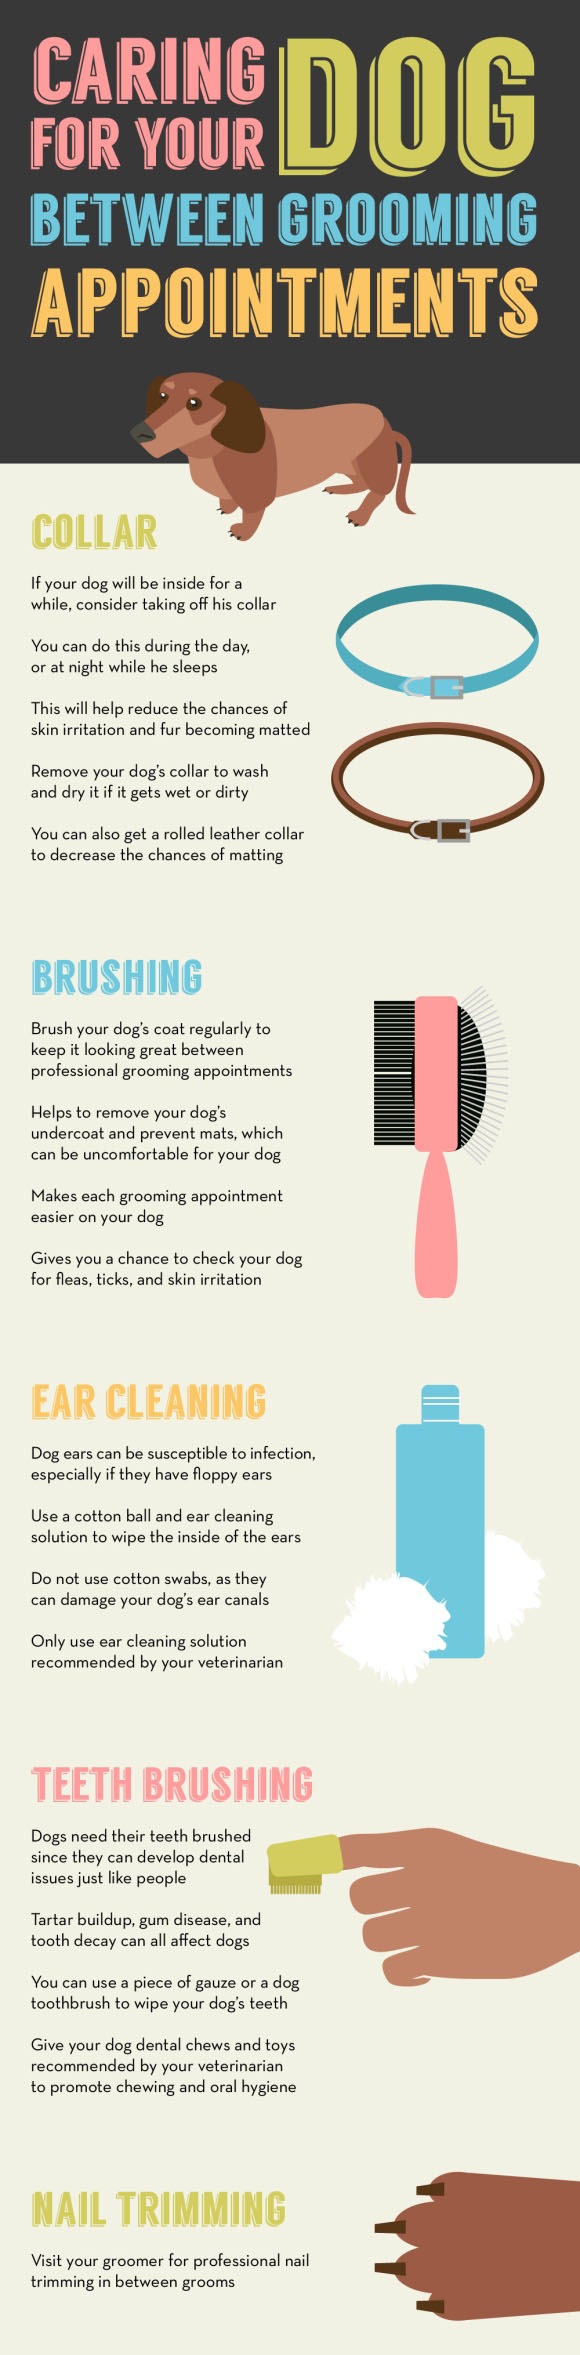 DOG grooming tips